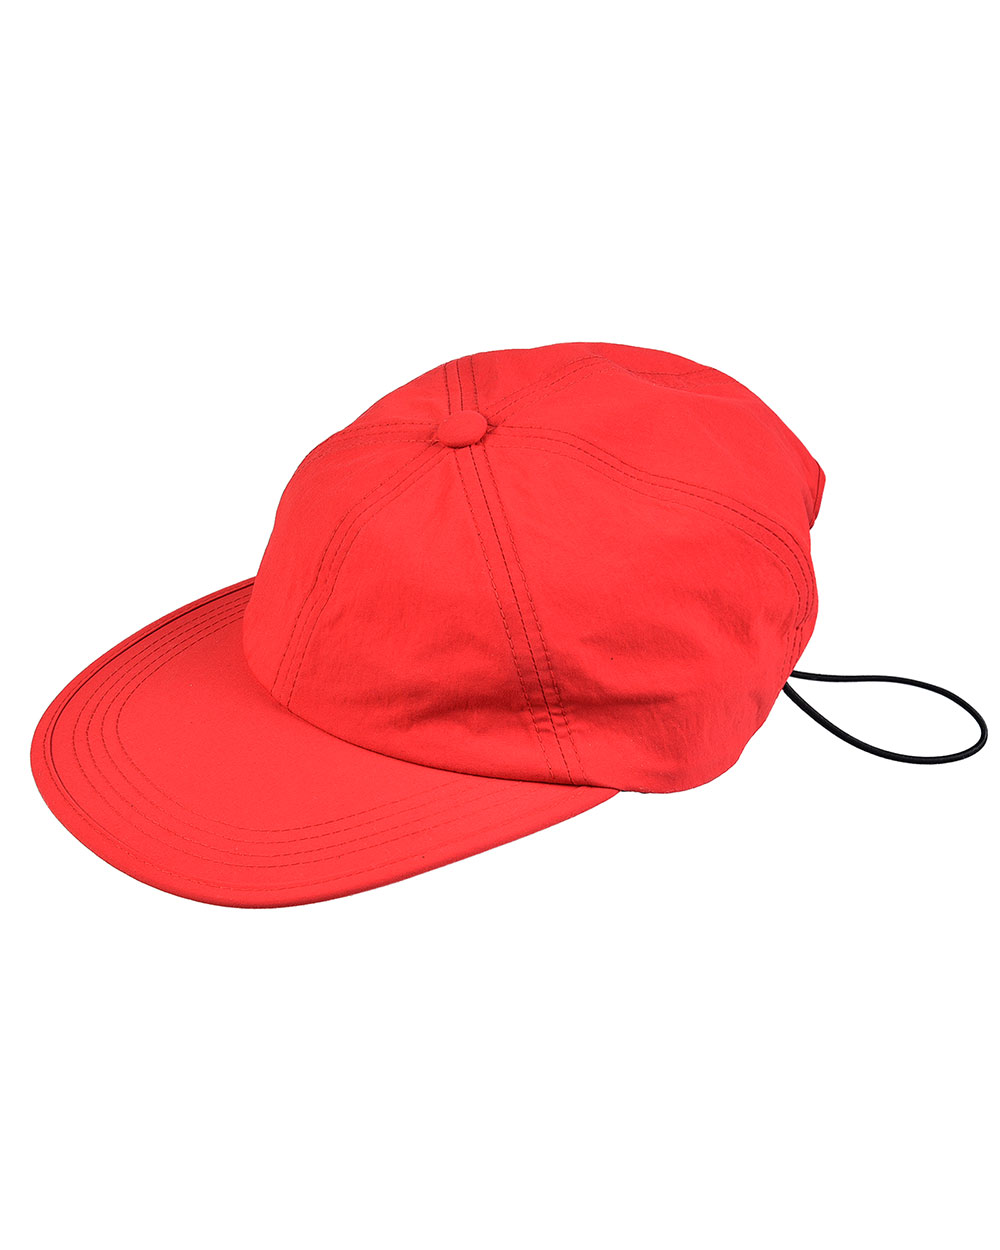 aeae Taslan Nylon Utility Cap (Red)